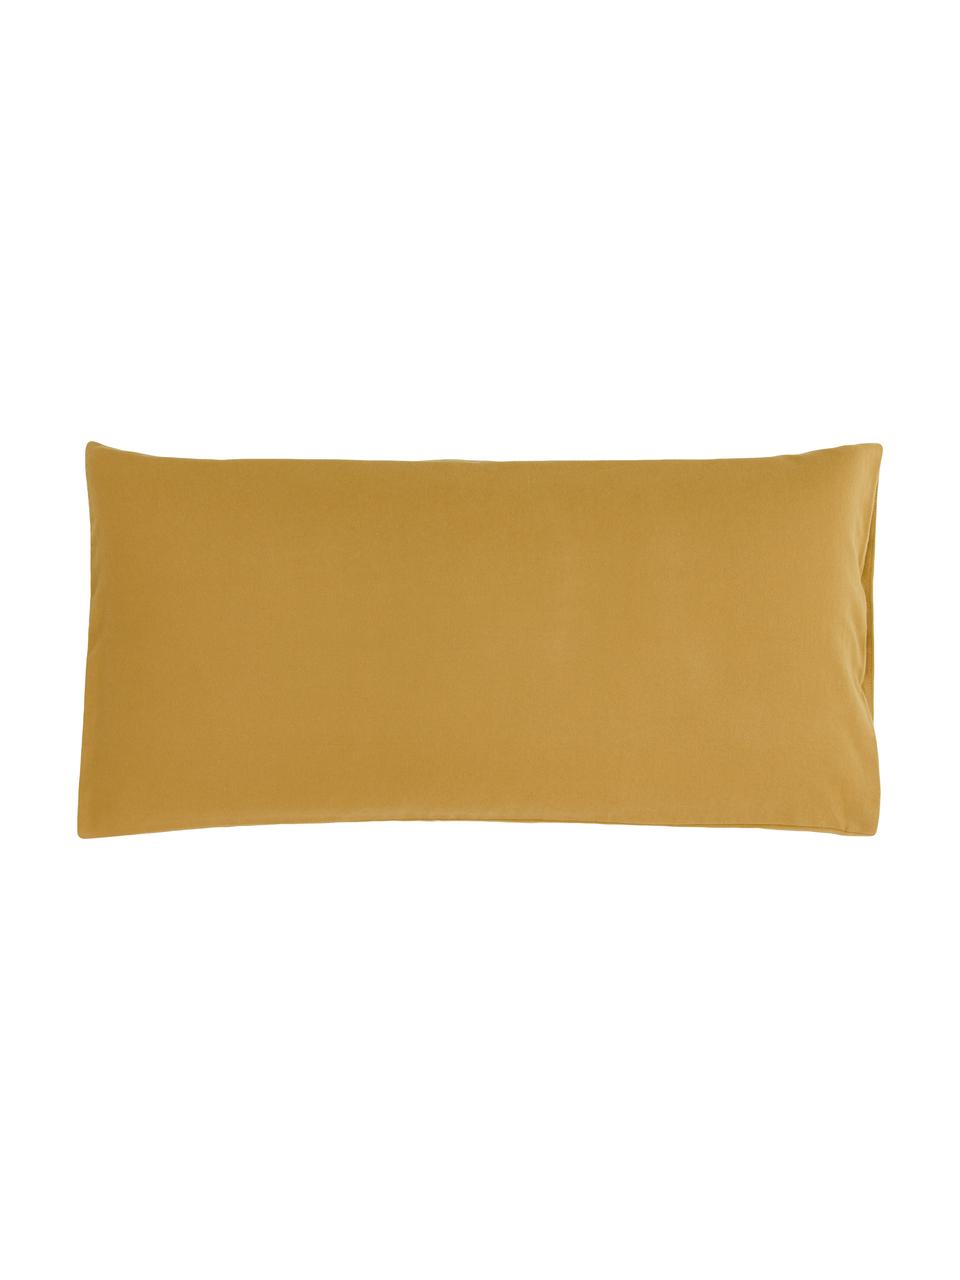 Flanell-Kissenbezüge Biba in Senfgelb, 2 Stück, Webart: Flanell Flanell ist ein k, Gelb, B 40 x L 80 cm